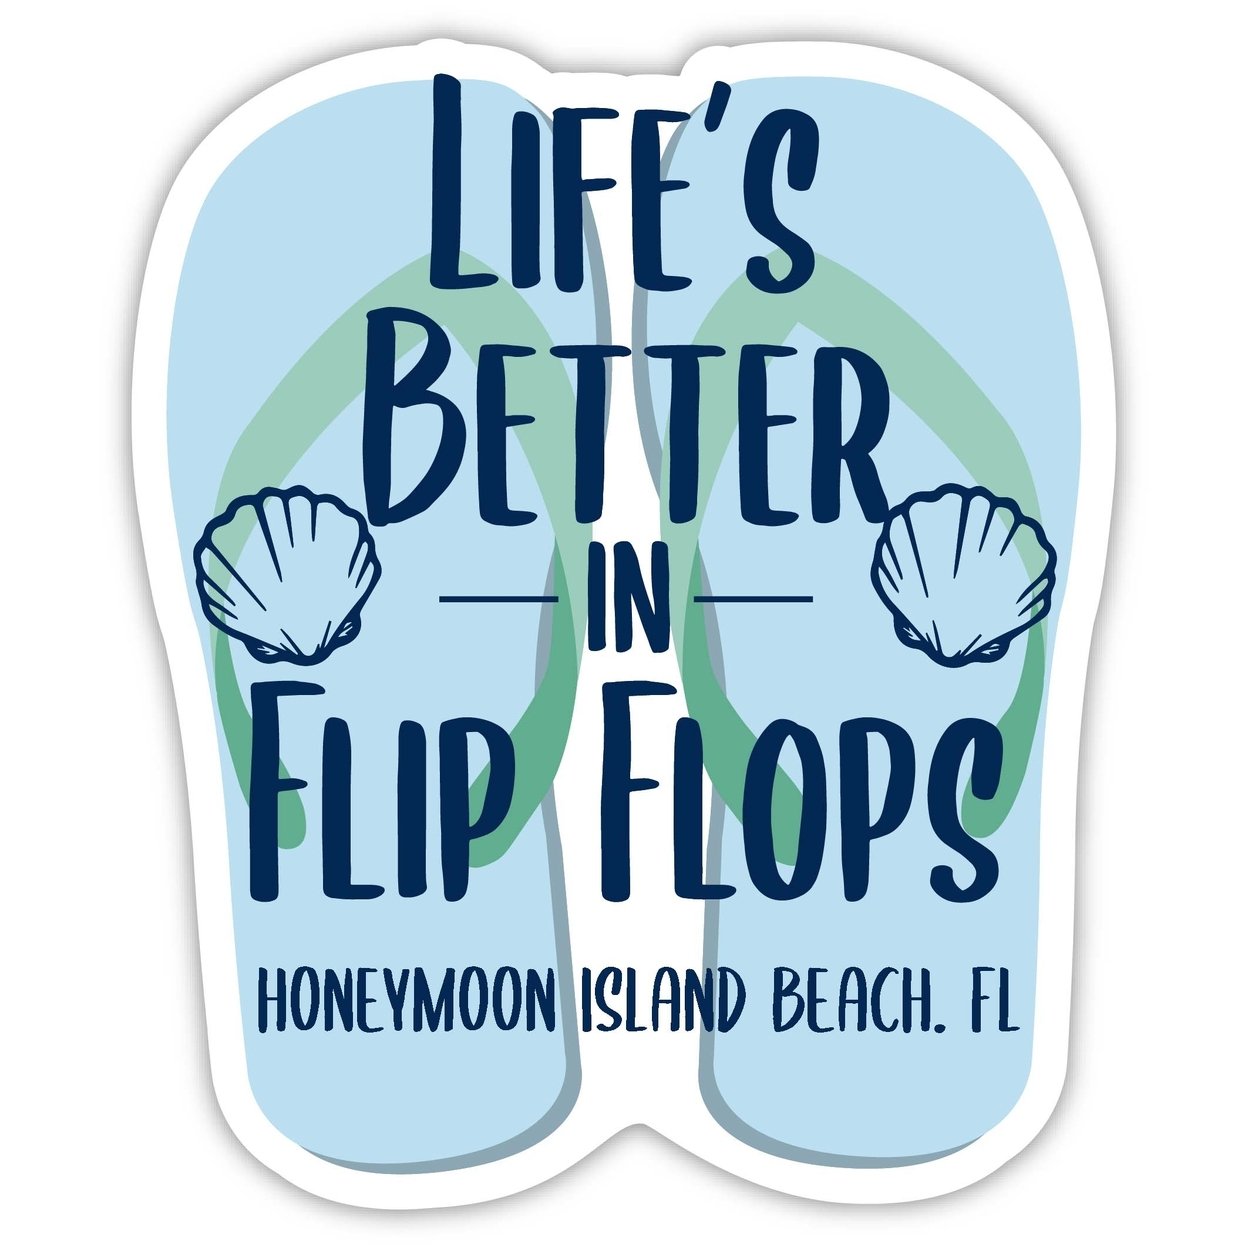 Honeymoon Island Beach Florida Souvenir 4 Inch Vinyl Decal Sticker Flip Flop Design